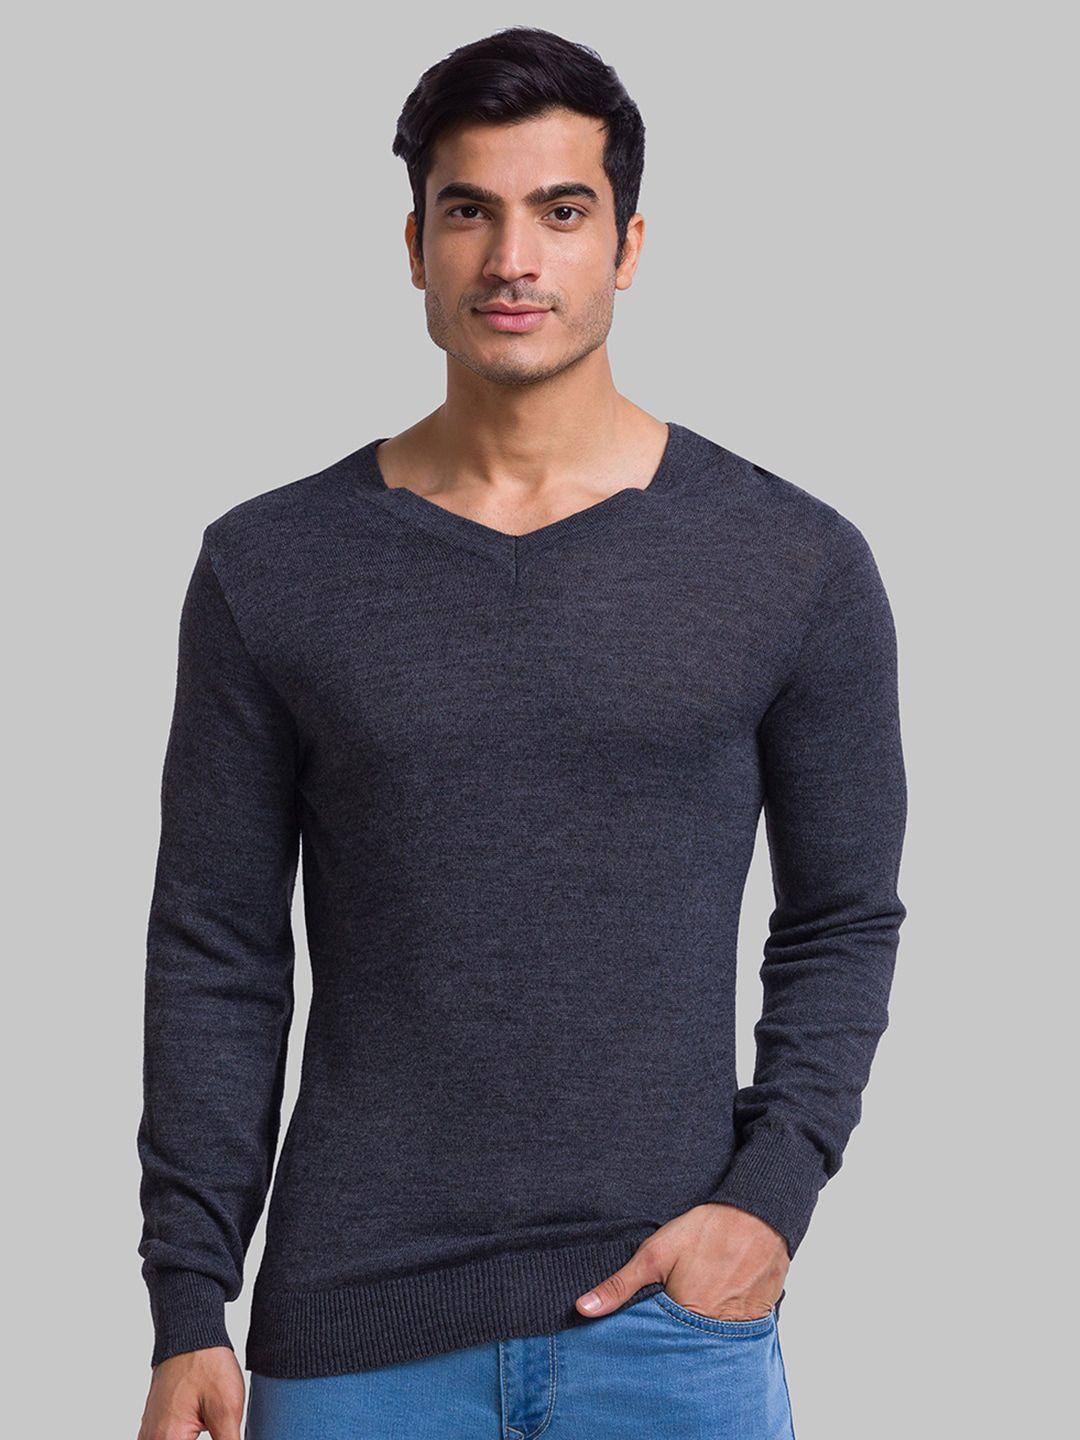 parx-men-v-neck-wool-pullover-sweater